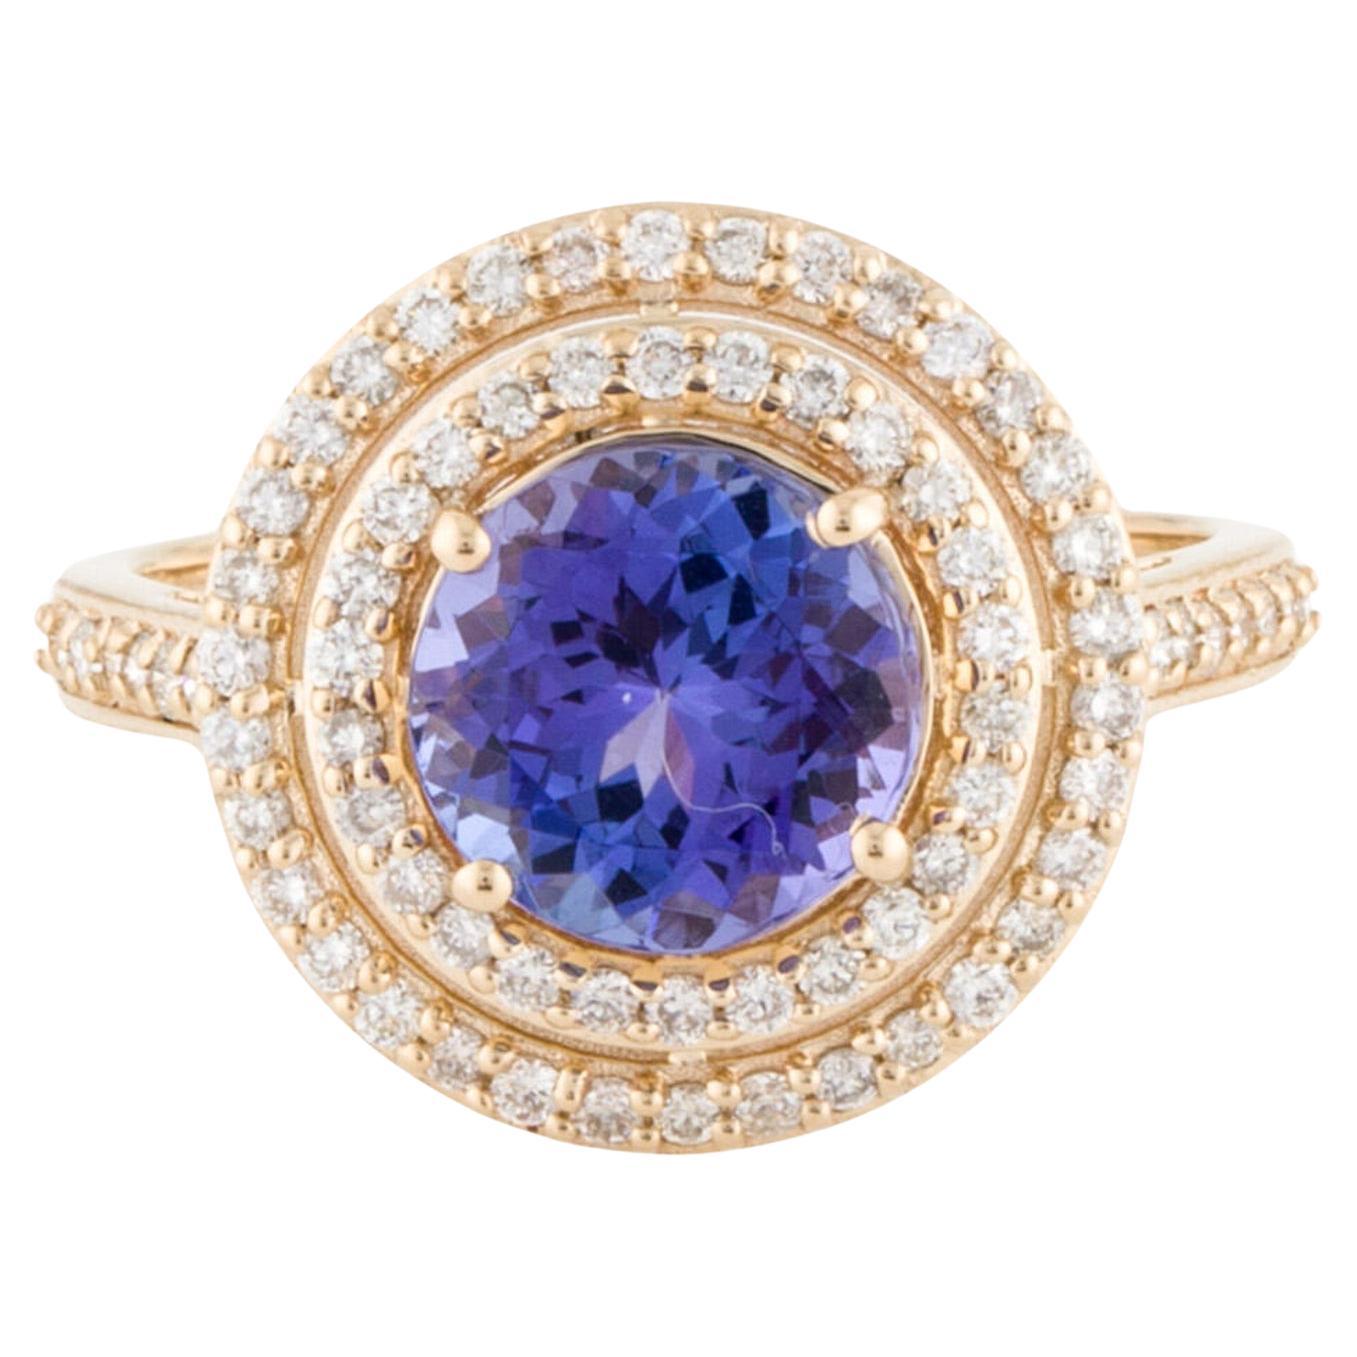 14K Tanzanite & Diamond Cocktail Ring - Size 6.75 - Luxury Statement Jewelry For Sale